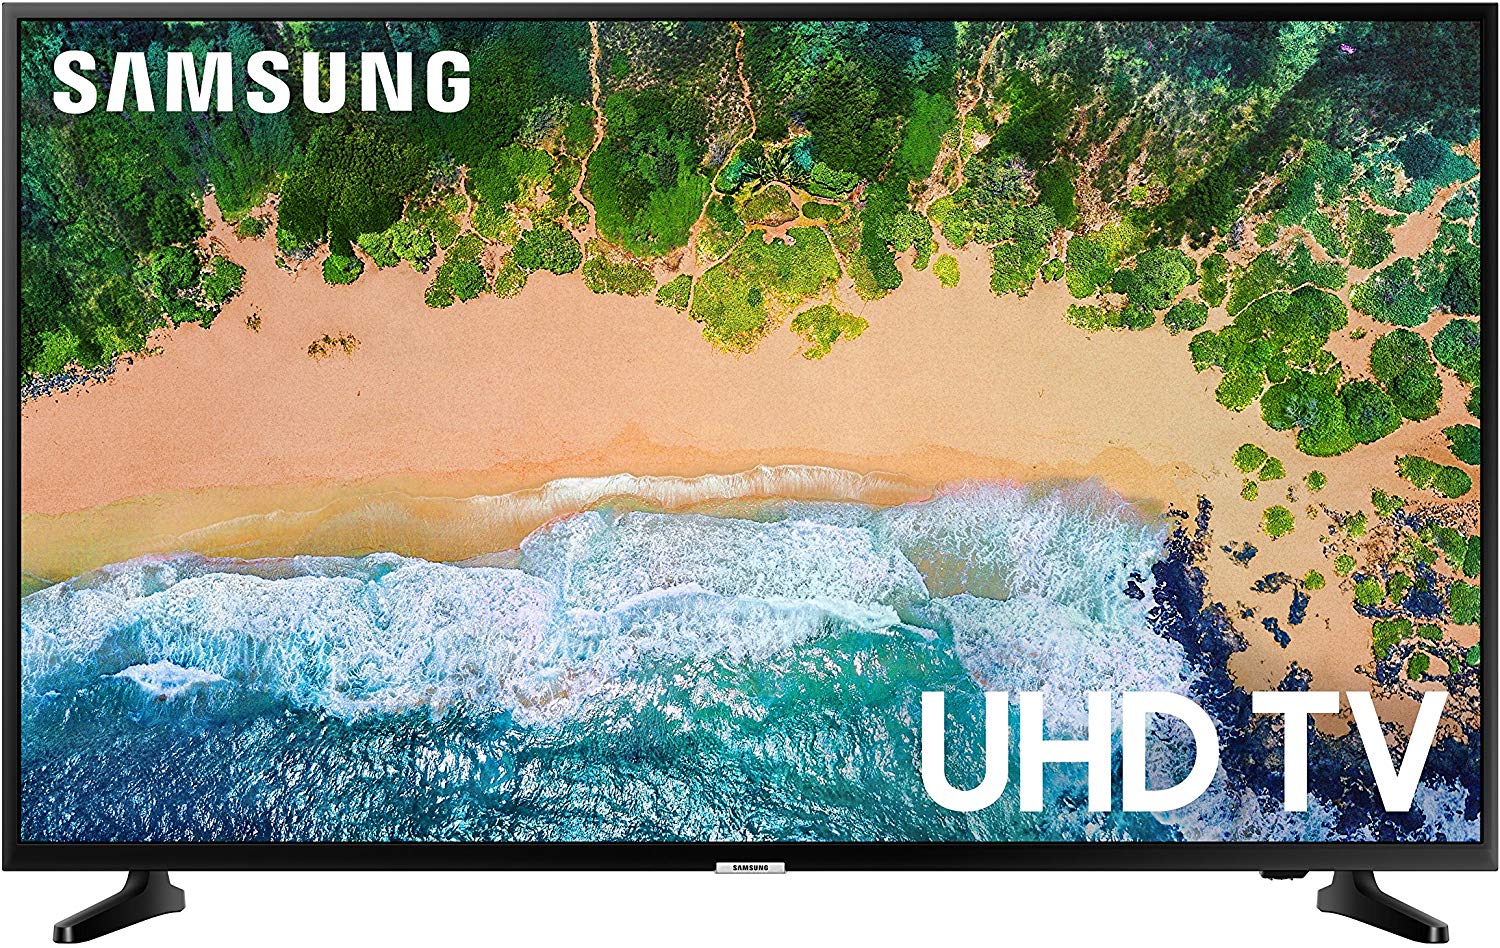 Samsung Electronics 4K Smart LED TV (2018), 55" (UN55NU6900FXZA)